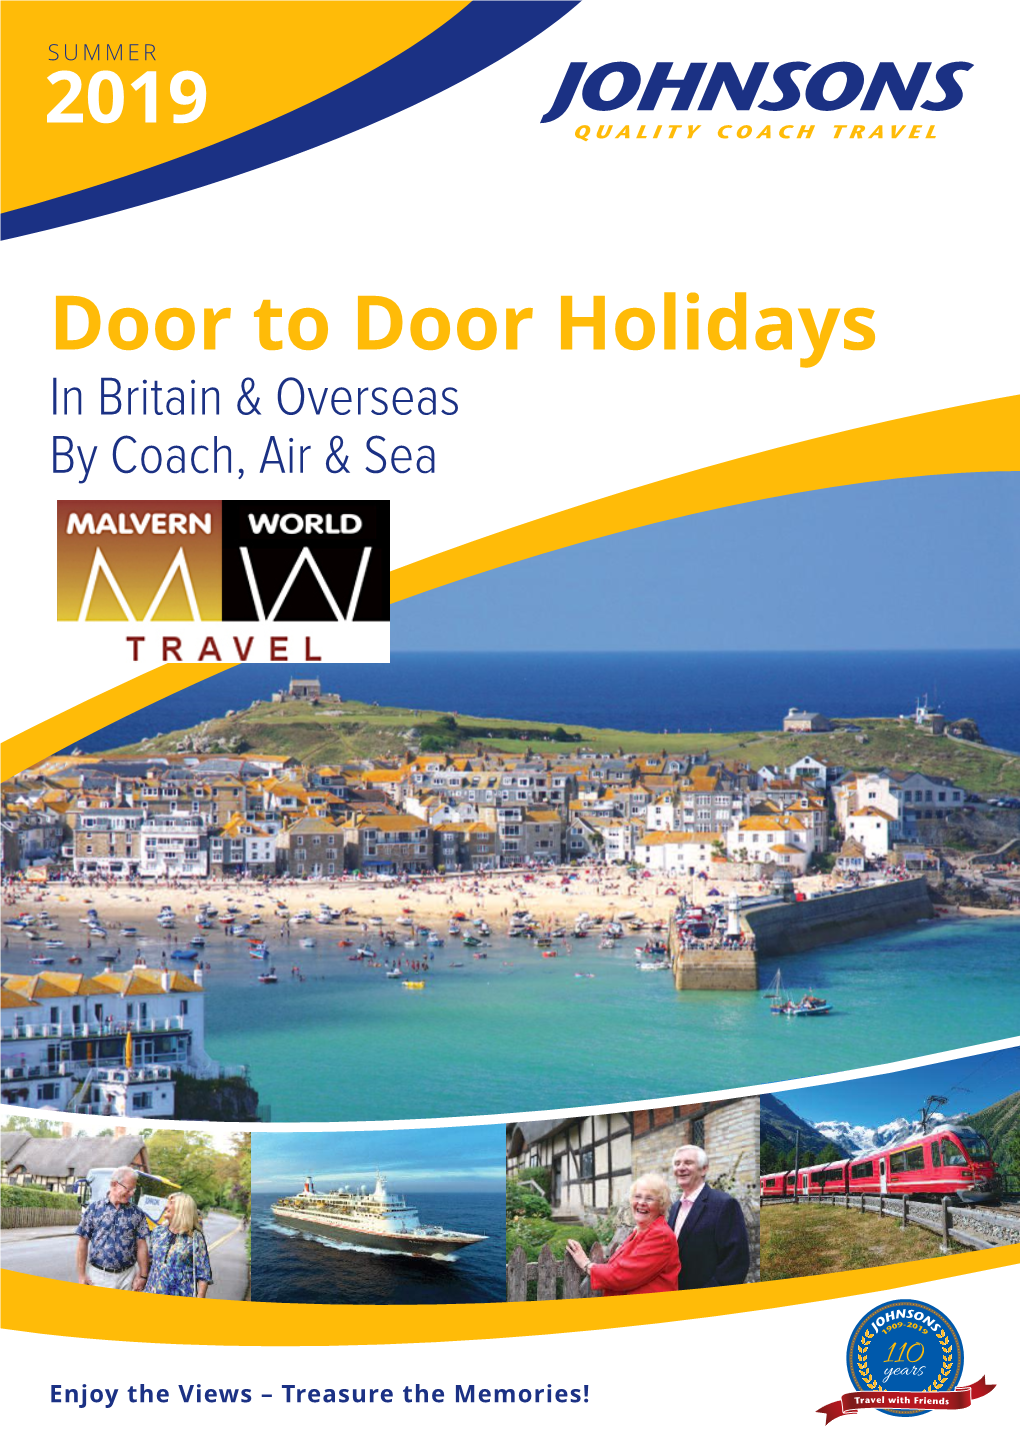 Door to Door Holidays in Britain & Overseas by Coach, Air & Sea